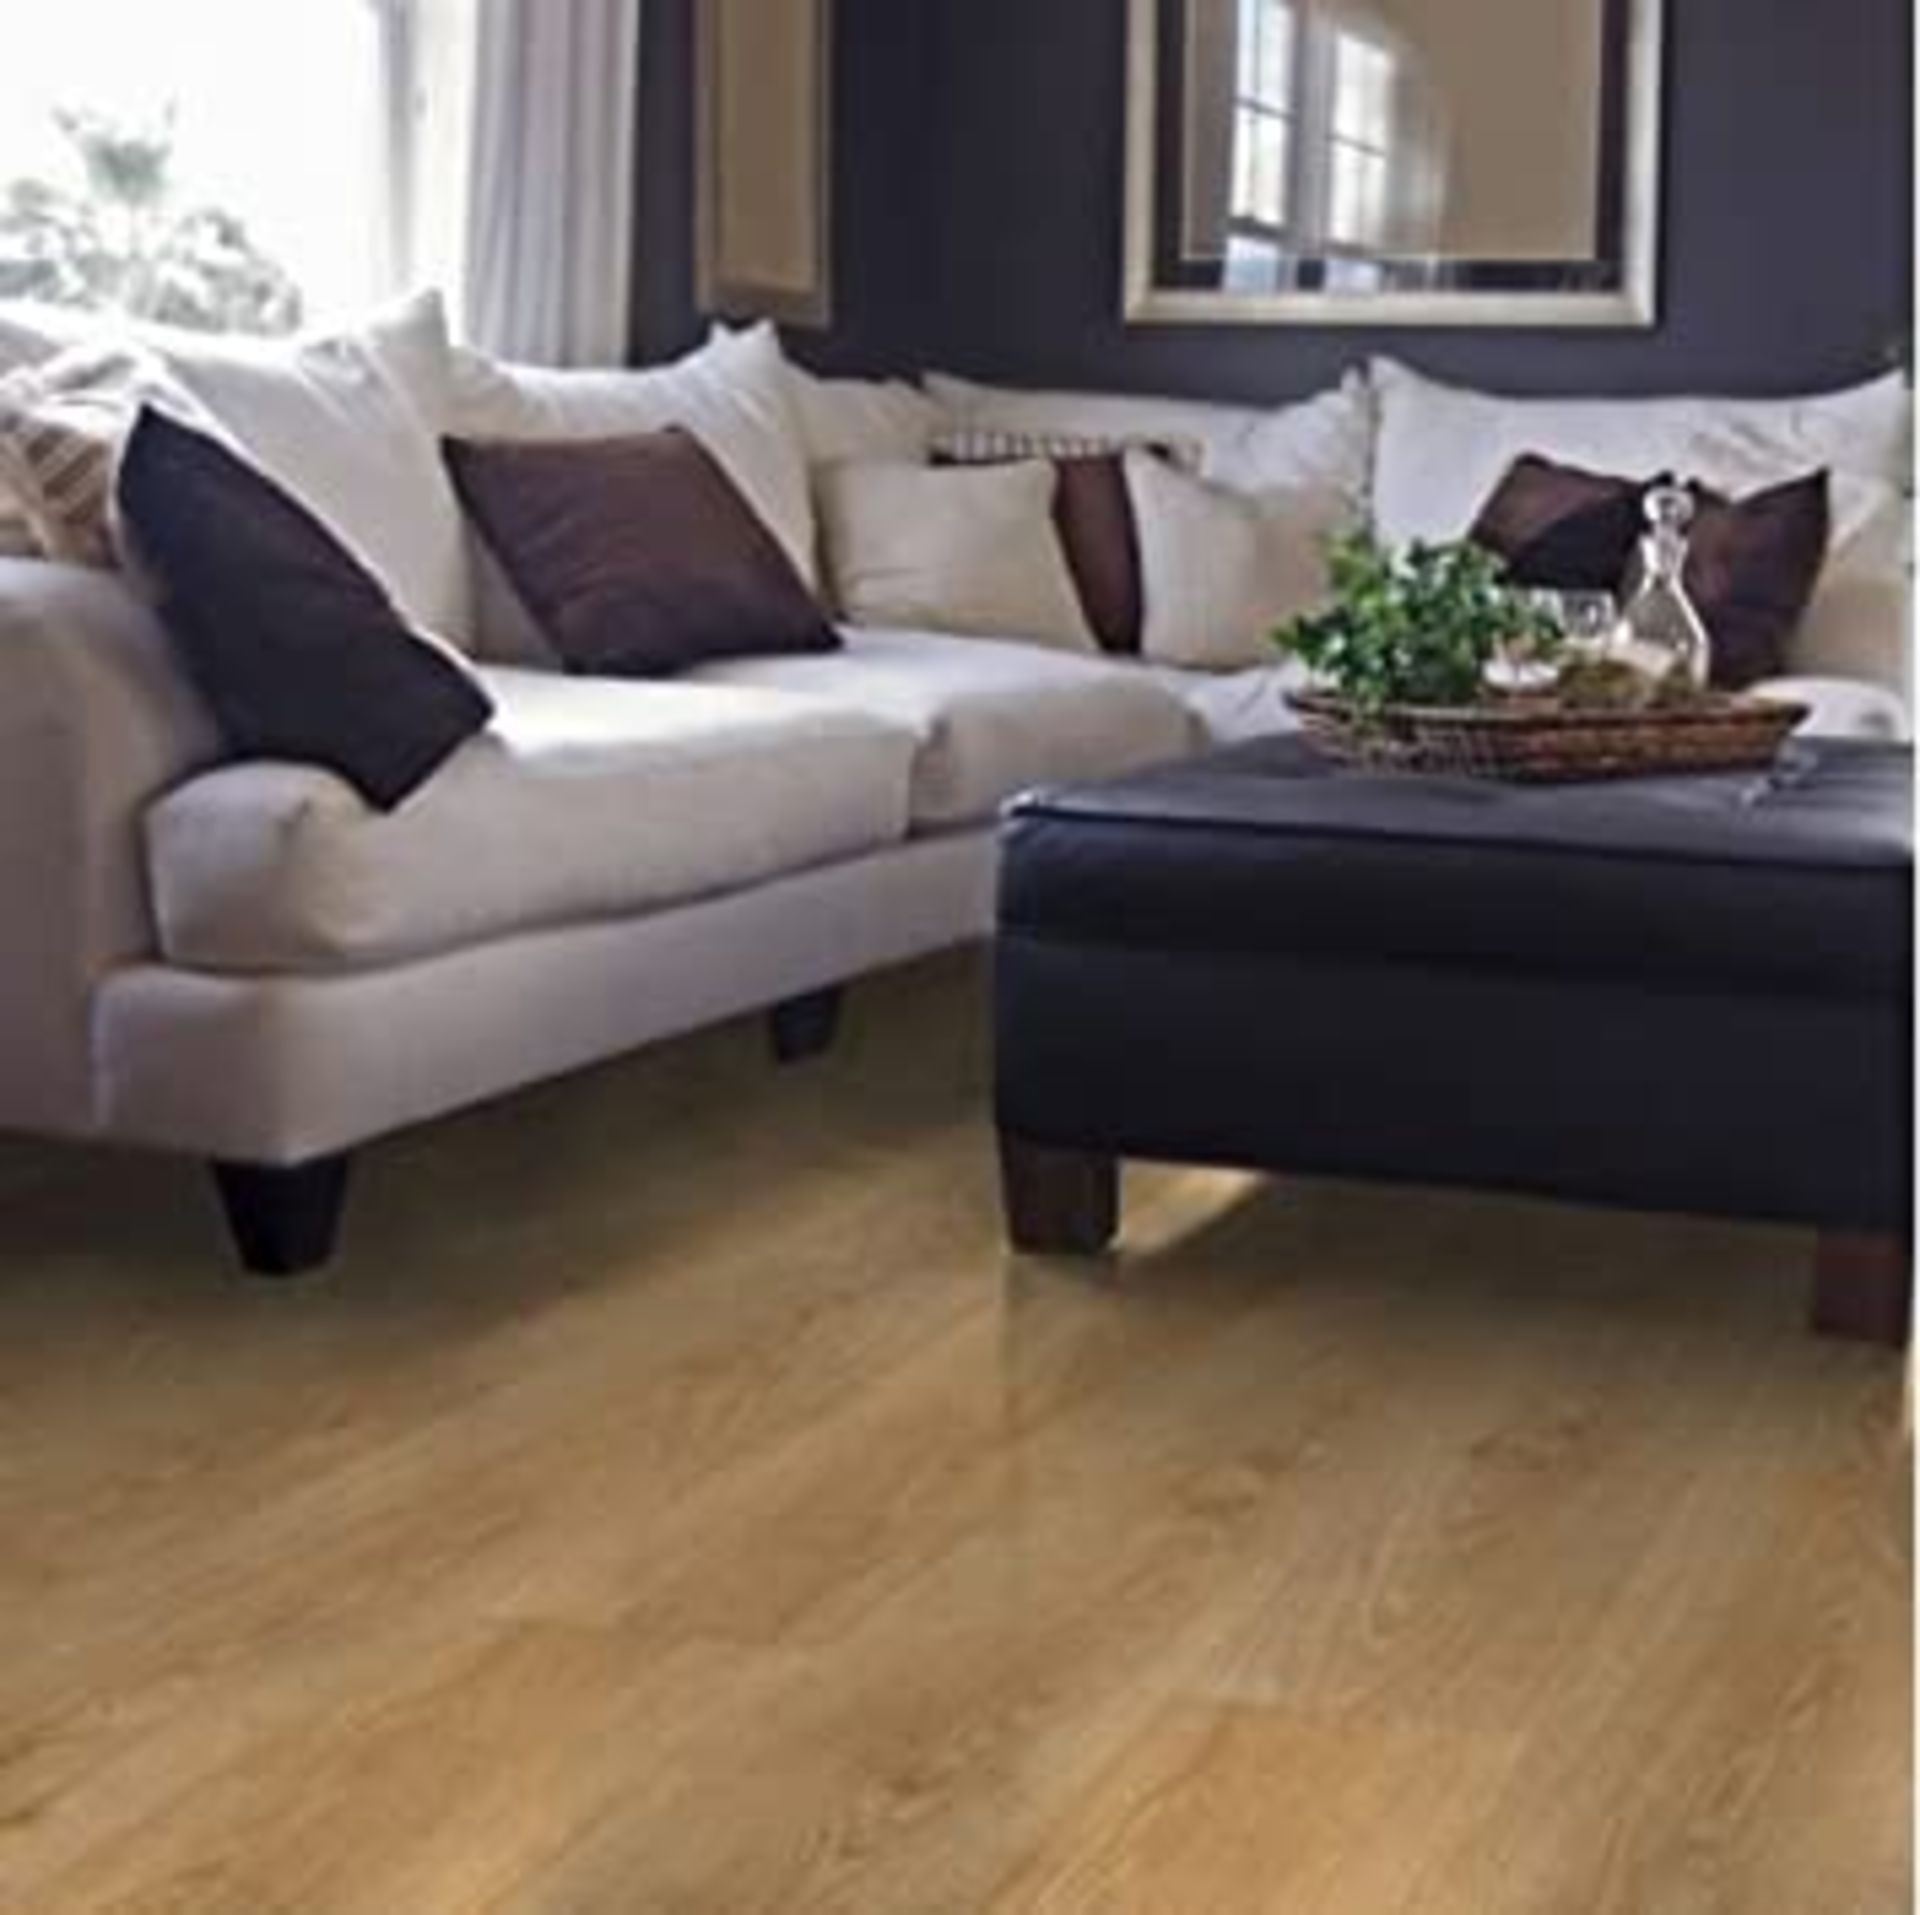 New 20m2 Milano Oak Effect Laminate Flooring, 1.25m2 Pack. This Overture Laminate Flooring Offe...